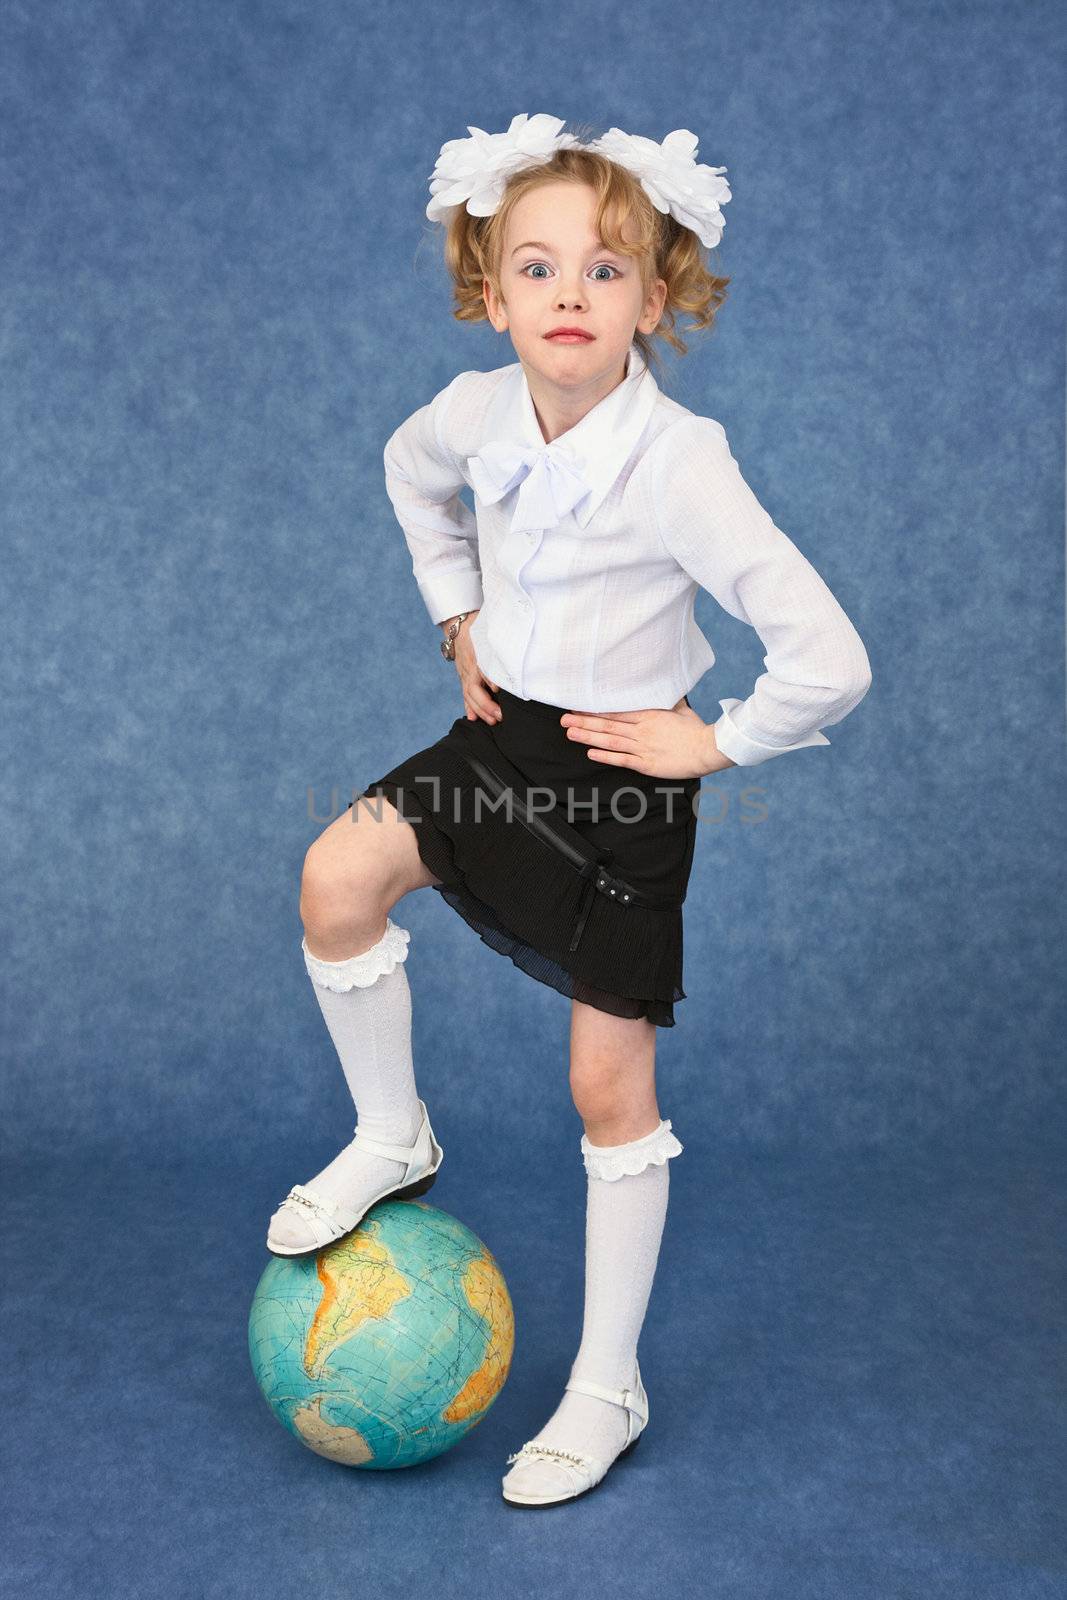 Schoolgirl set foot on a globe like a soccer ball